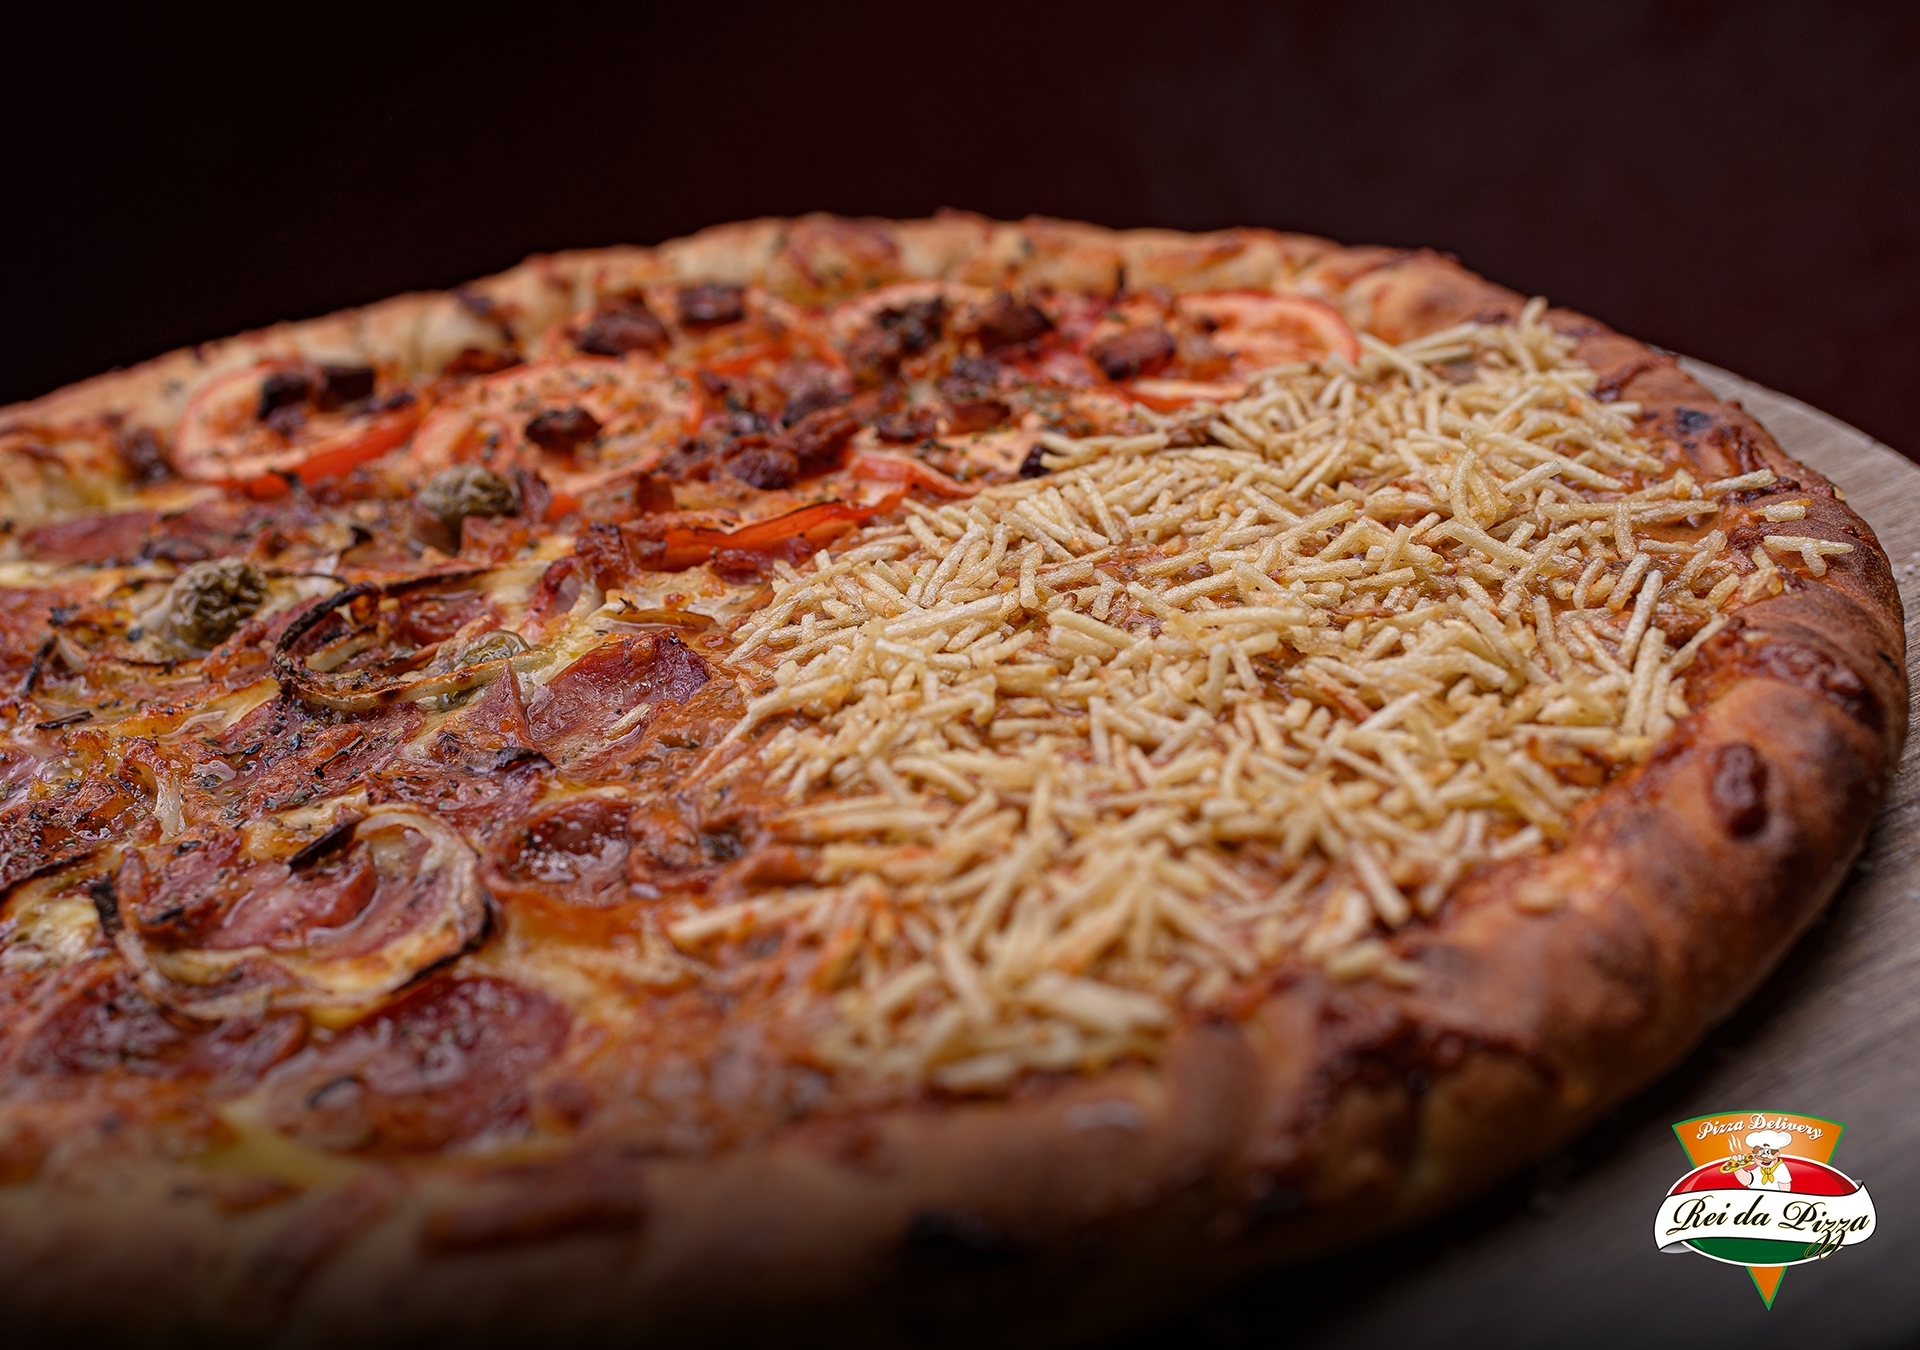 #pizza 3 sabores 🍕🍕🍕 #calabresa, #strogonoff e #siciliana 👀 da #reidapizzaczs